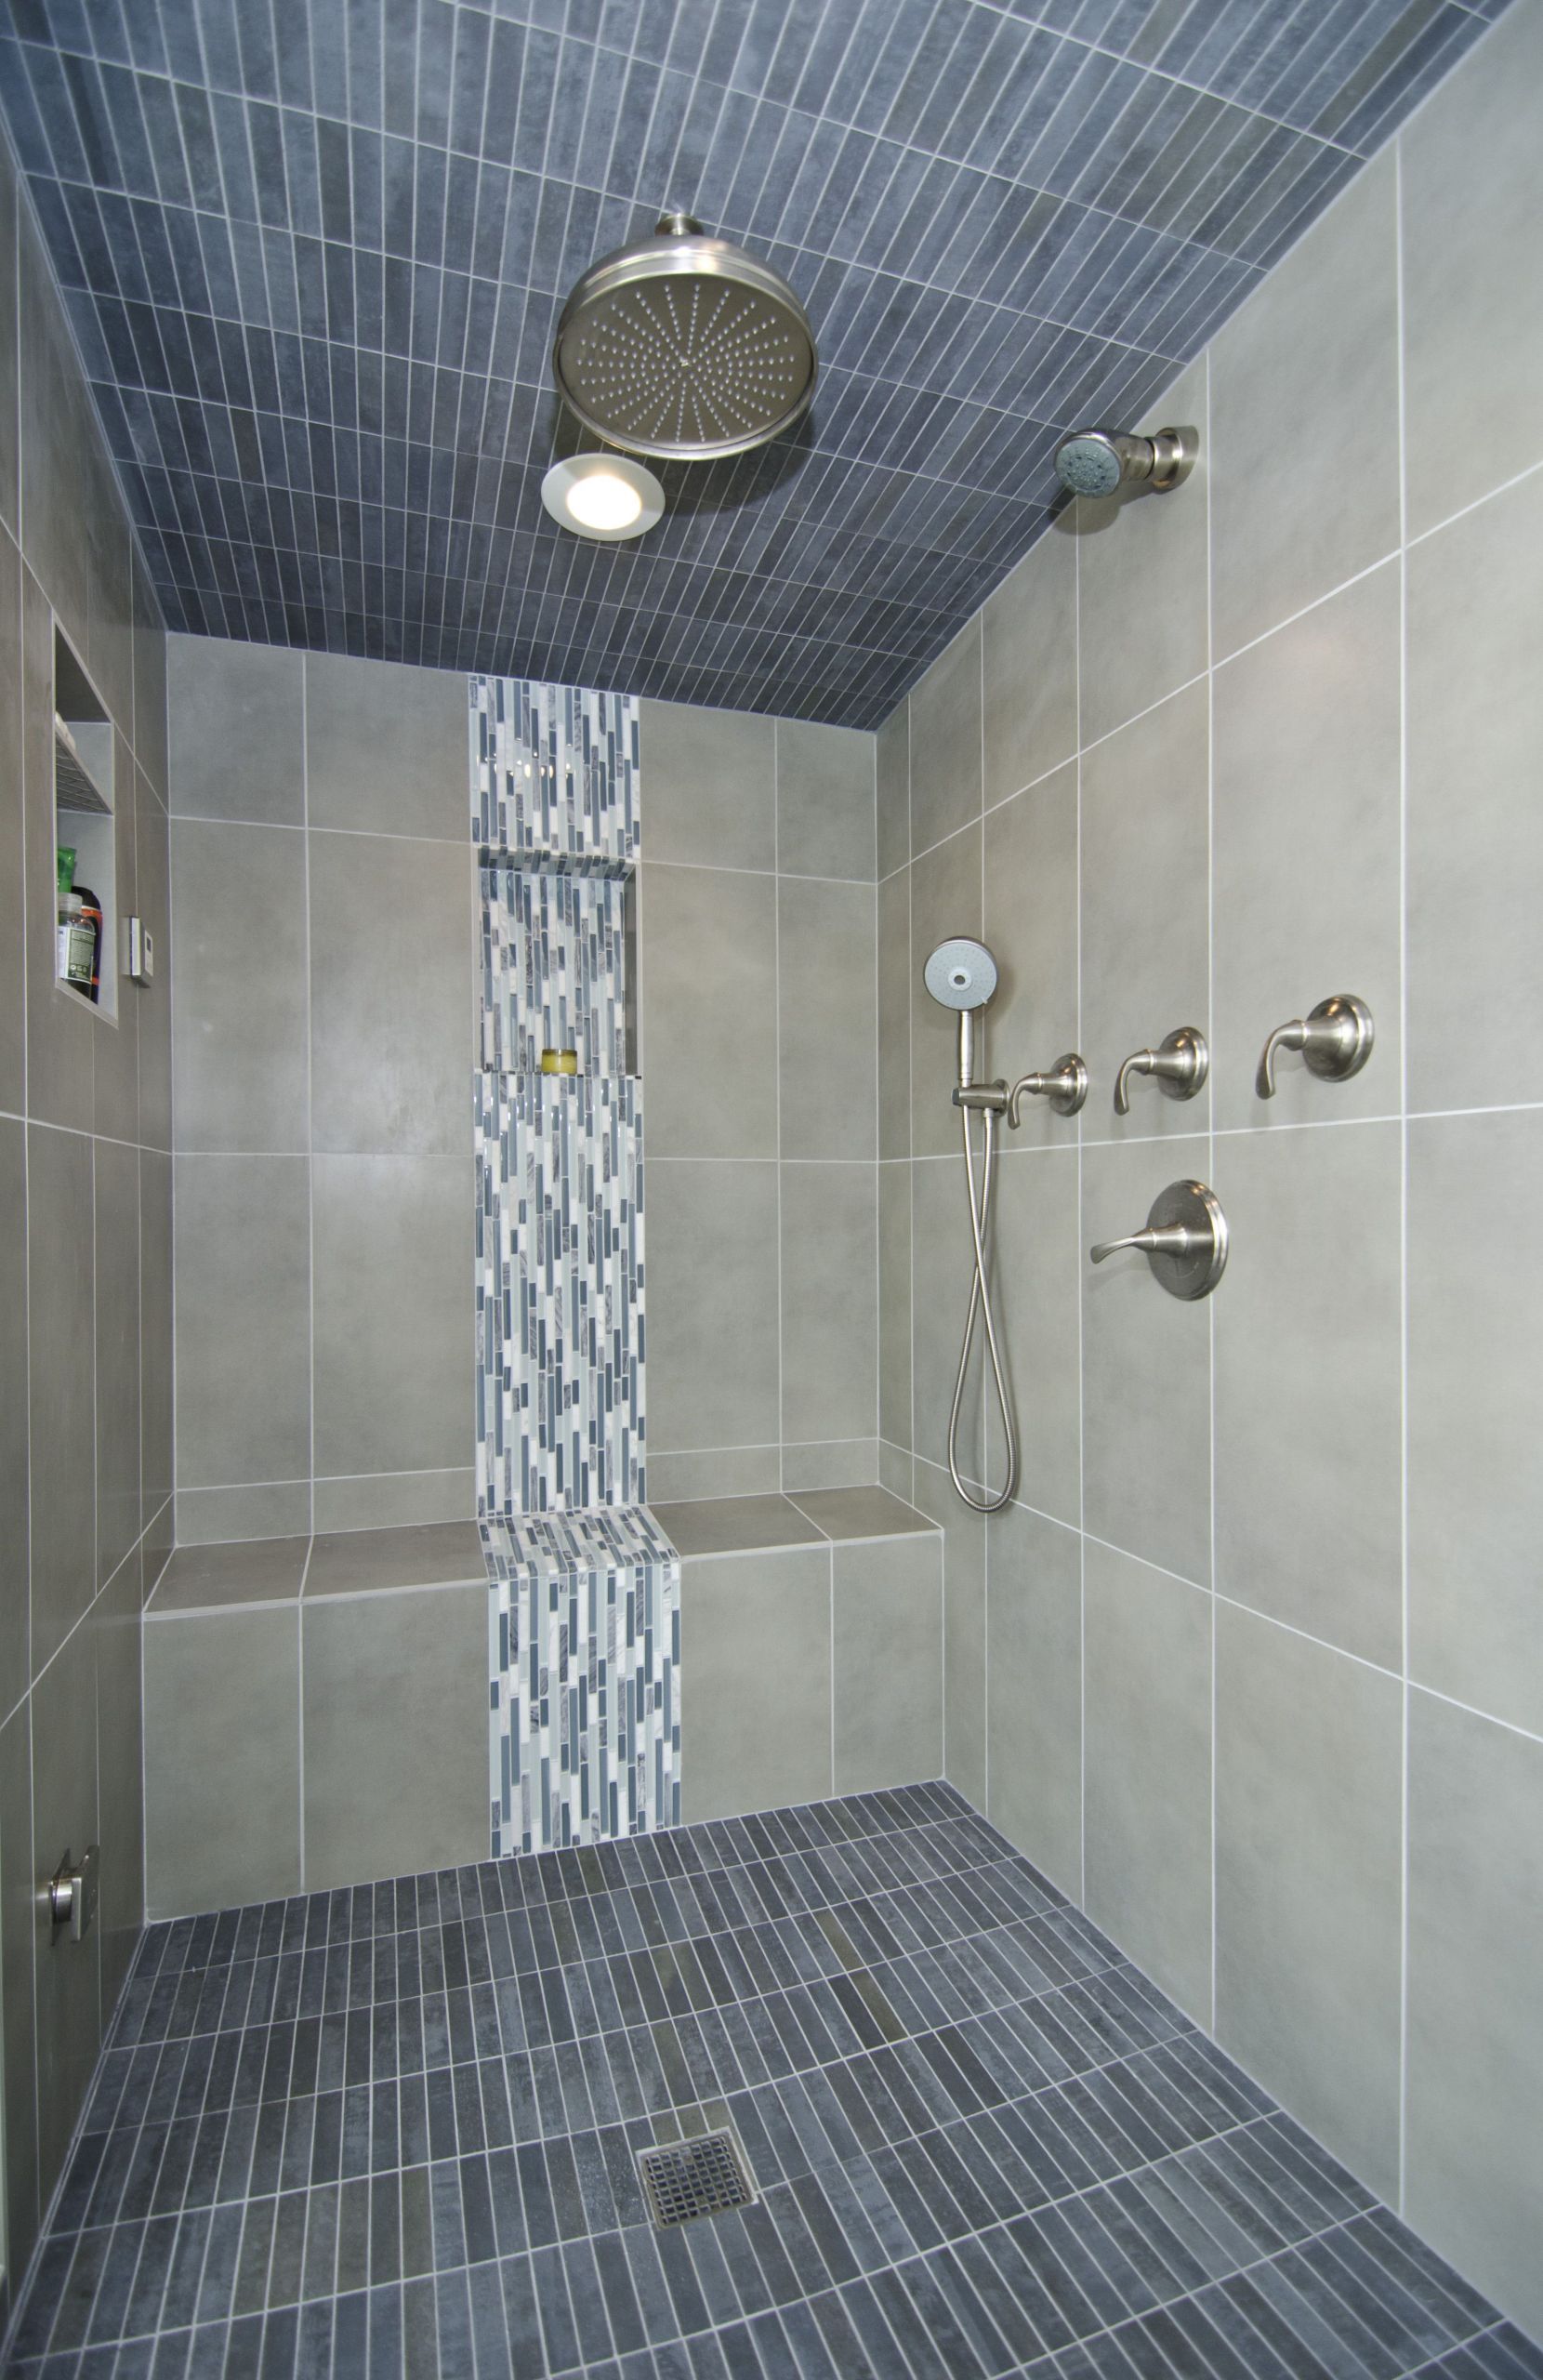 Bathroom Tile Shower Designs
 Beautiful tilework highlights this steam shower tile